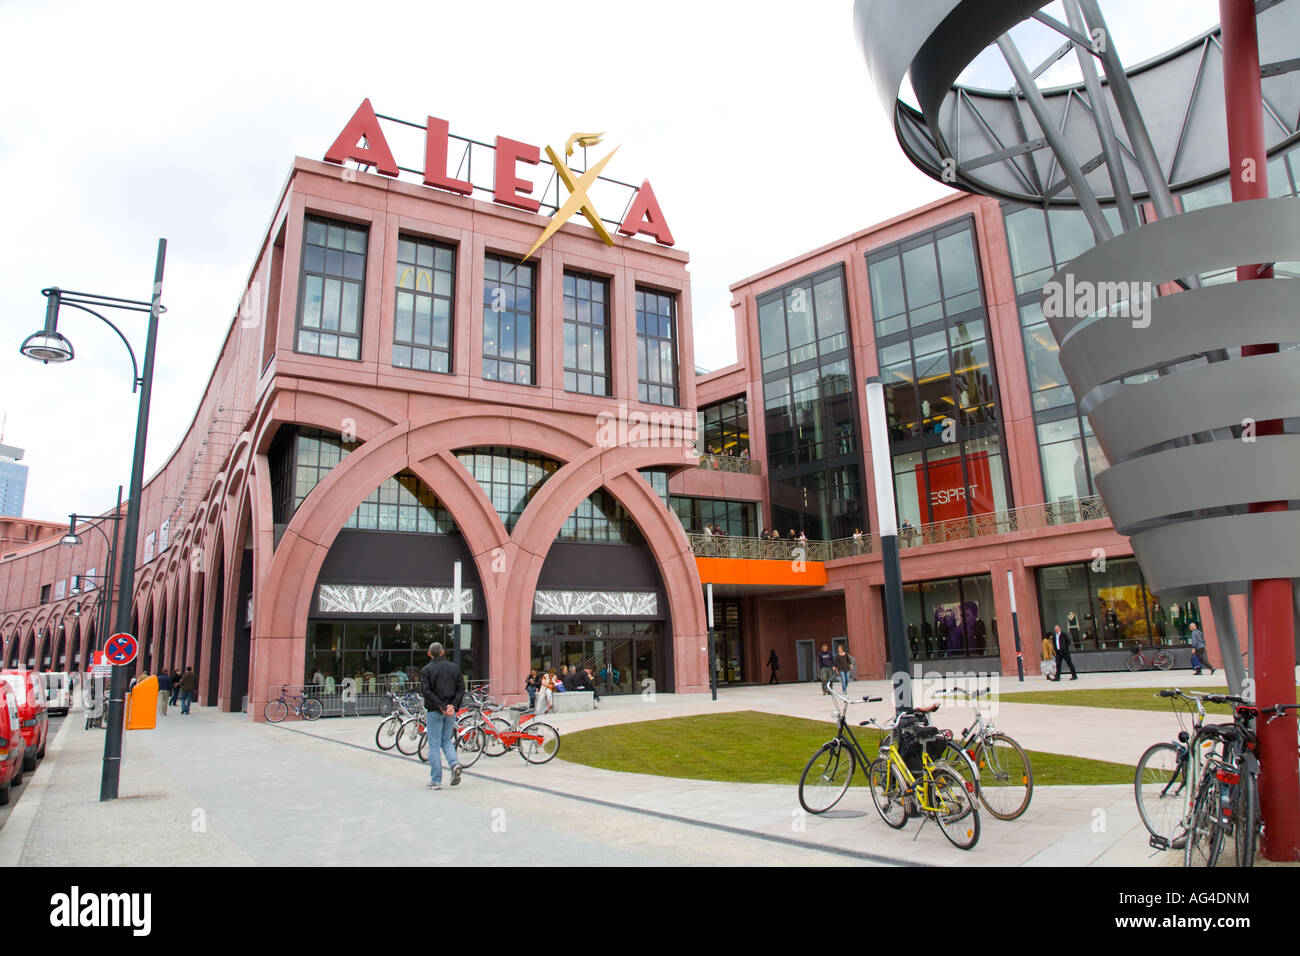 Alexa Shopping Center, Berlin Stock Photo - Alamy